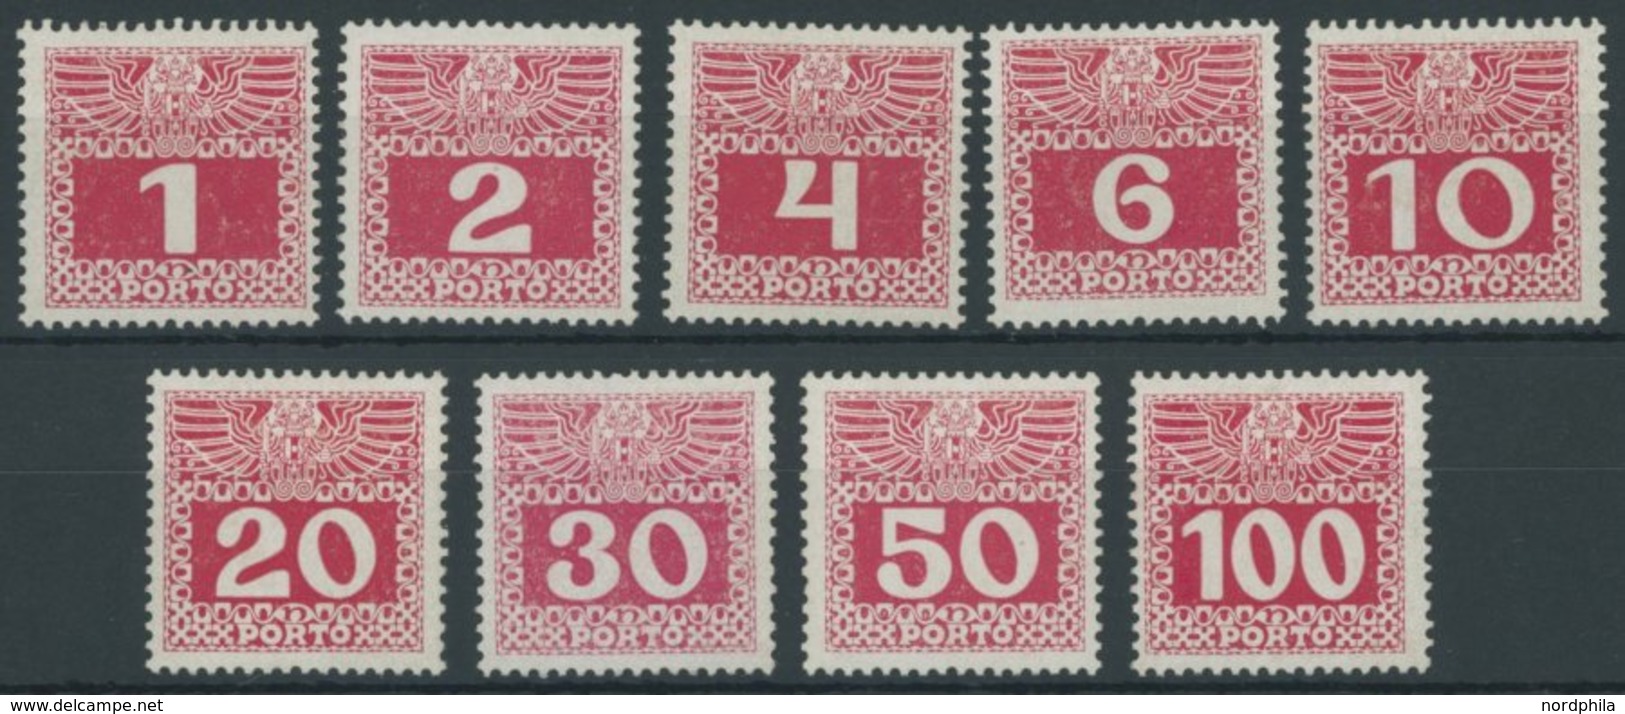 PORTOMARKEN P 34-44x *, 1908, 1 - 100 H. Lebhaftlilarot, Kreidepapier, Falzreste, Prachtsatz (9 Werte), Mi. 85.- - Taxe